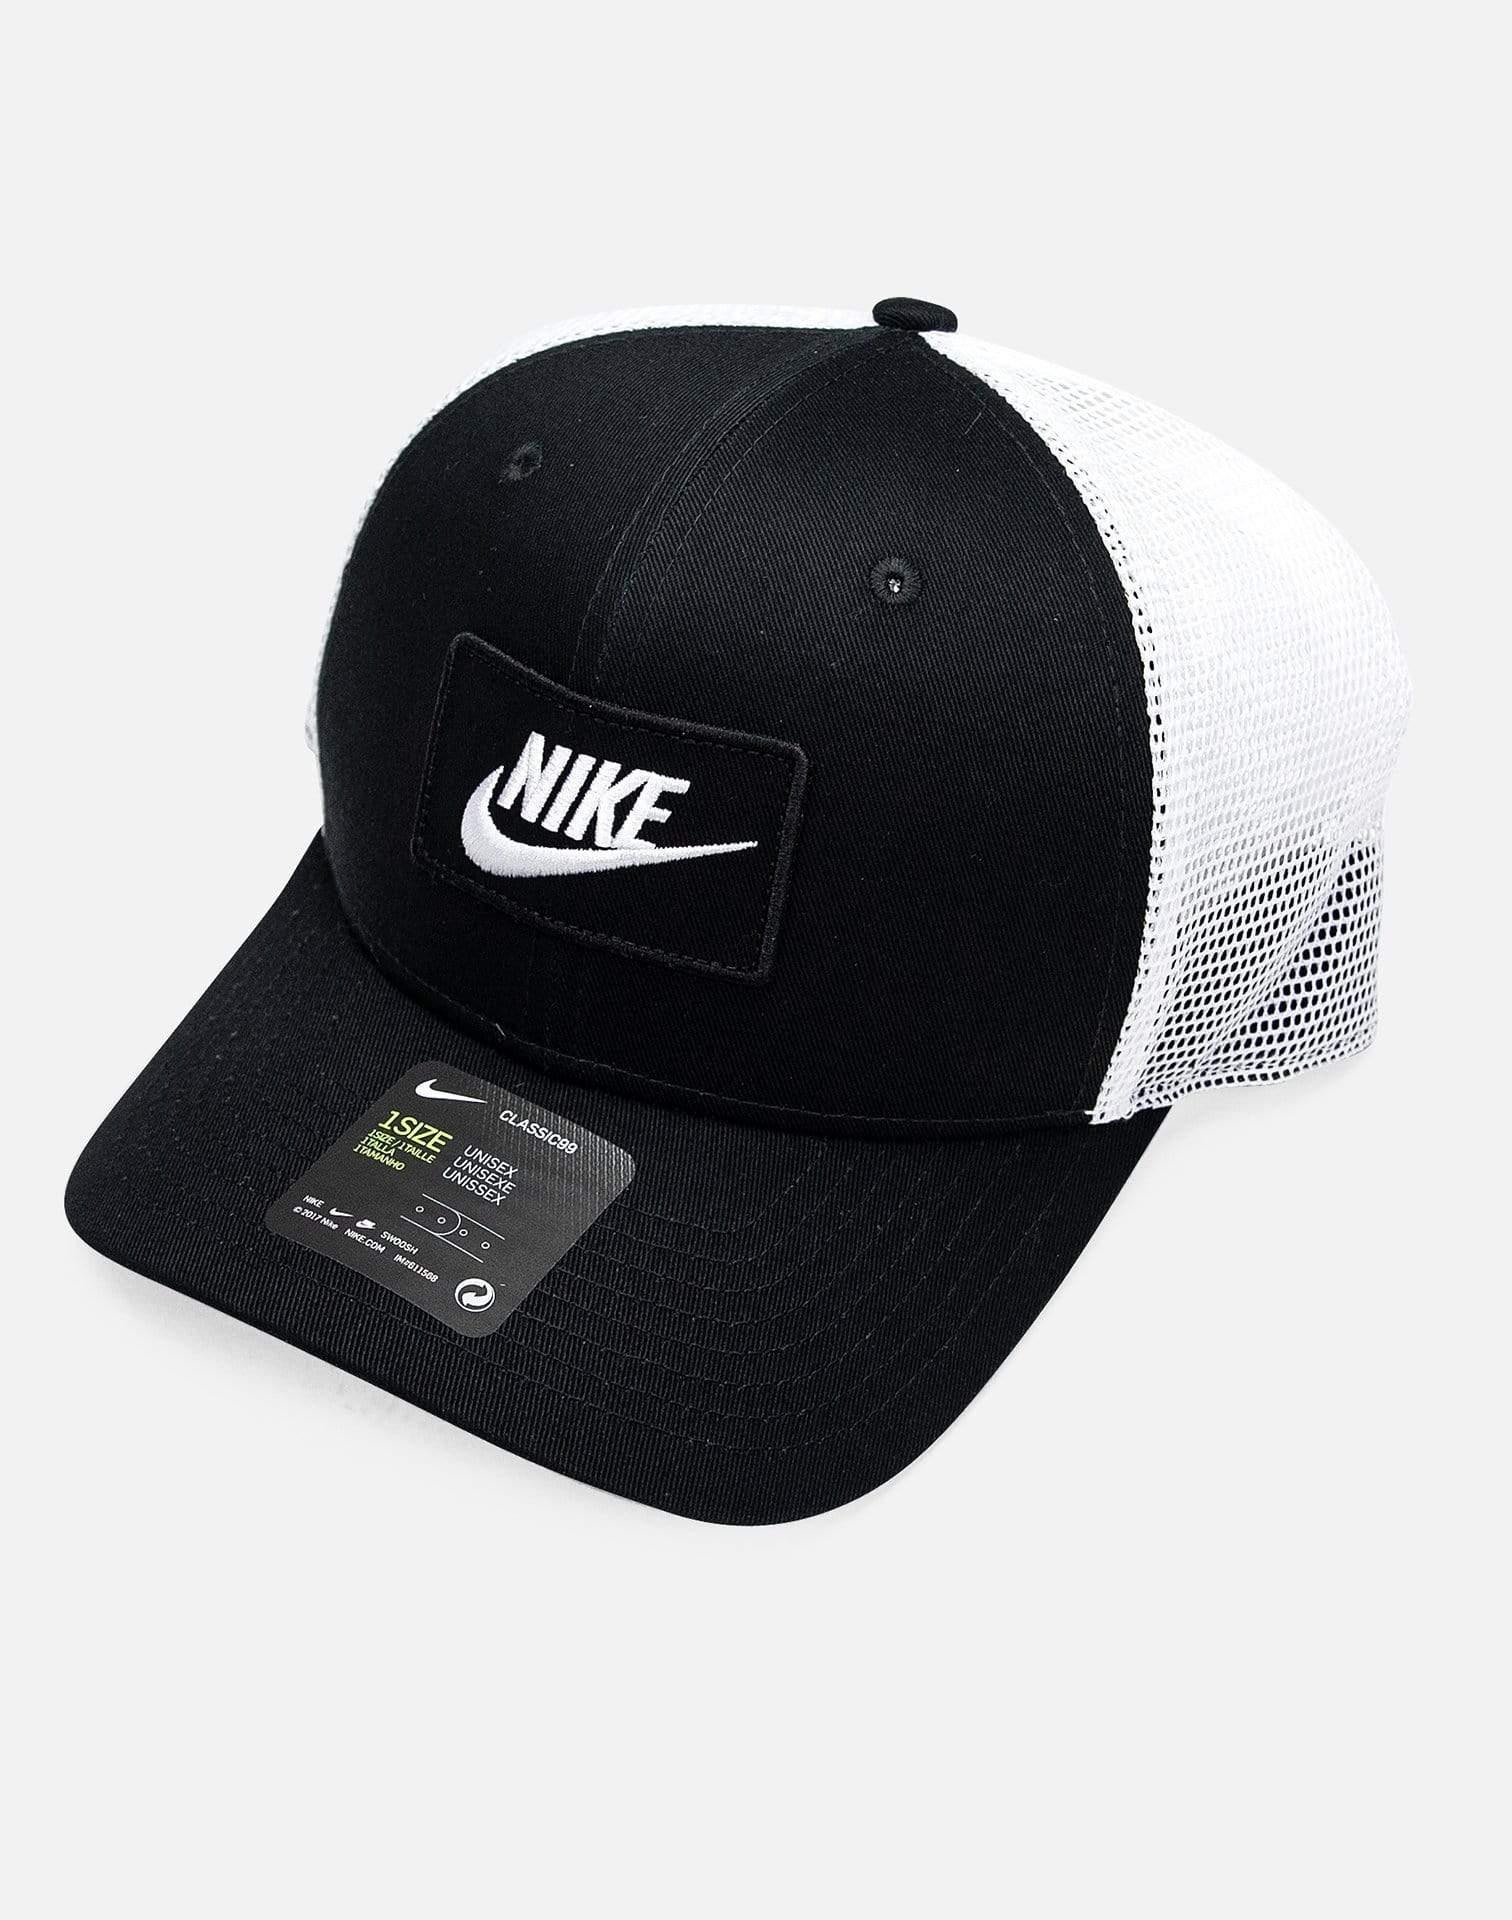 Nike Cotton Nsw Classic99 Trucker Hat in Black for Men - Lyst